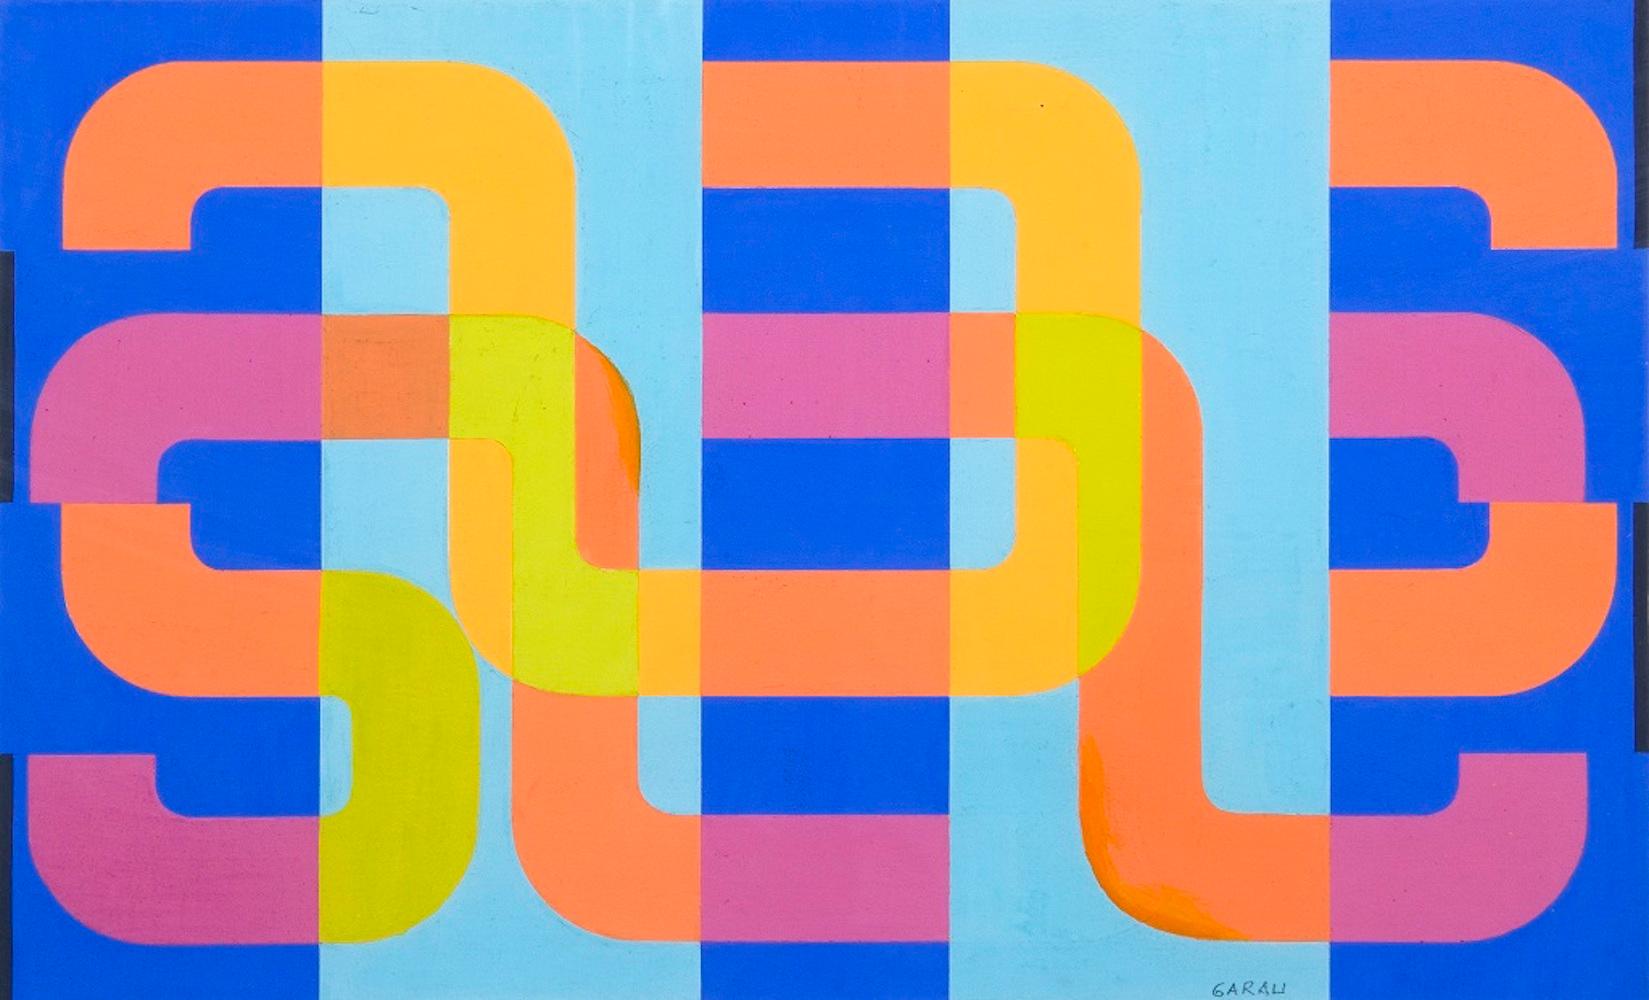 Augusto Garau Abstract Painting - Untitled - Original Tempera on Cardboard by A. Garau - 1970s